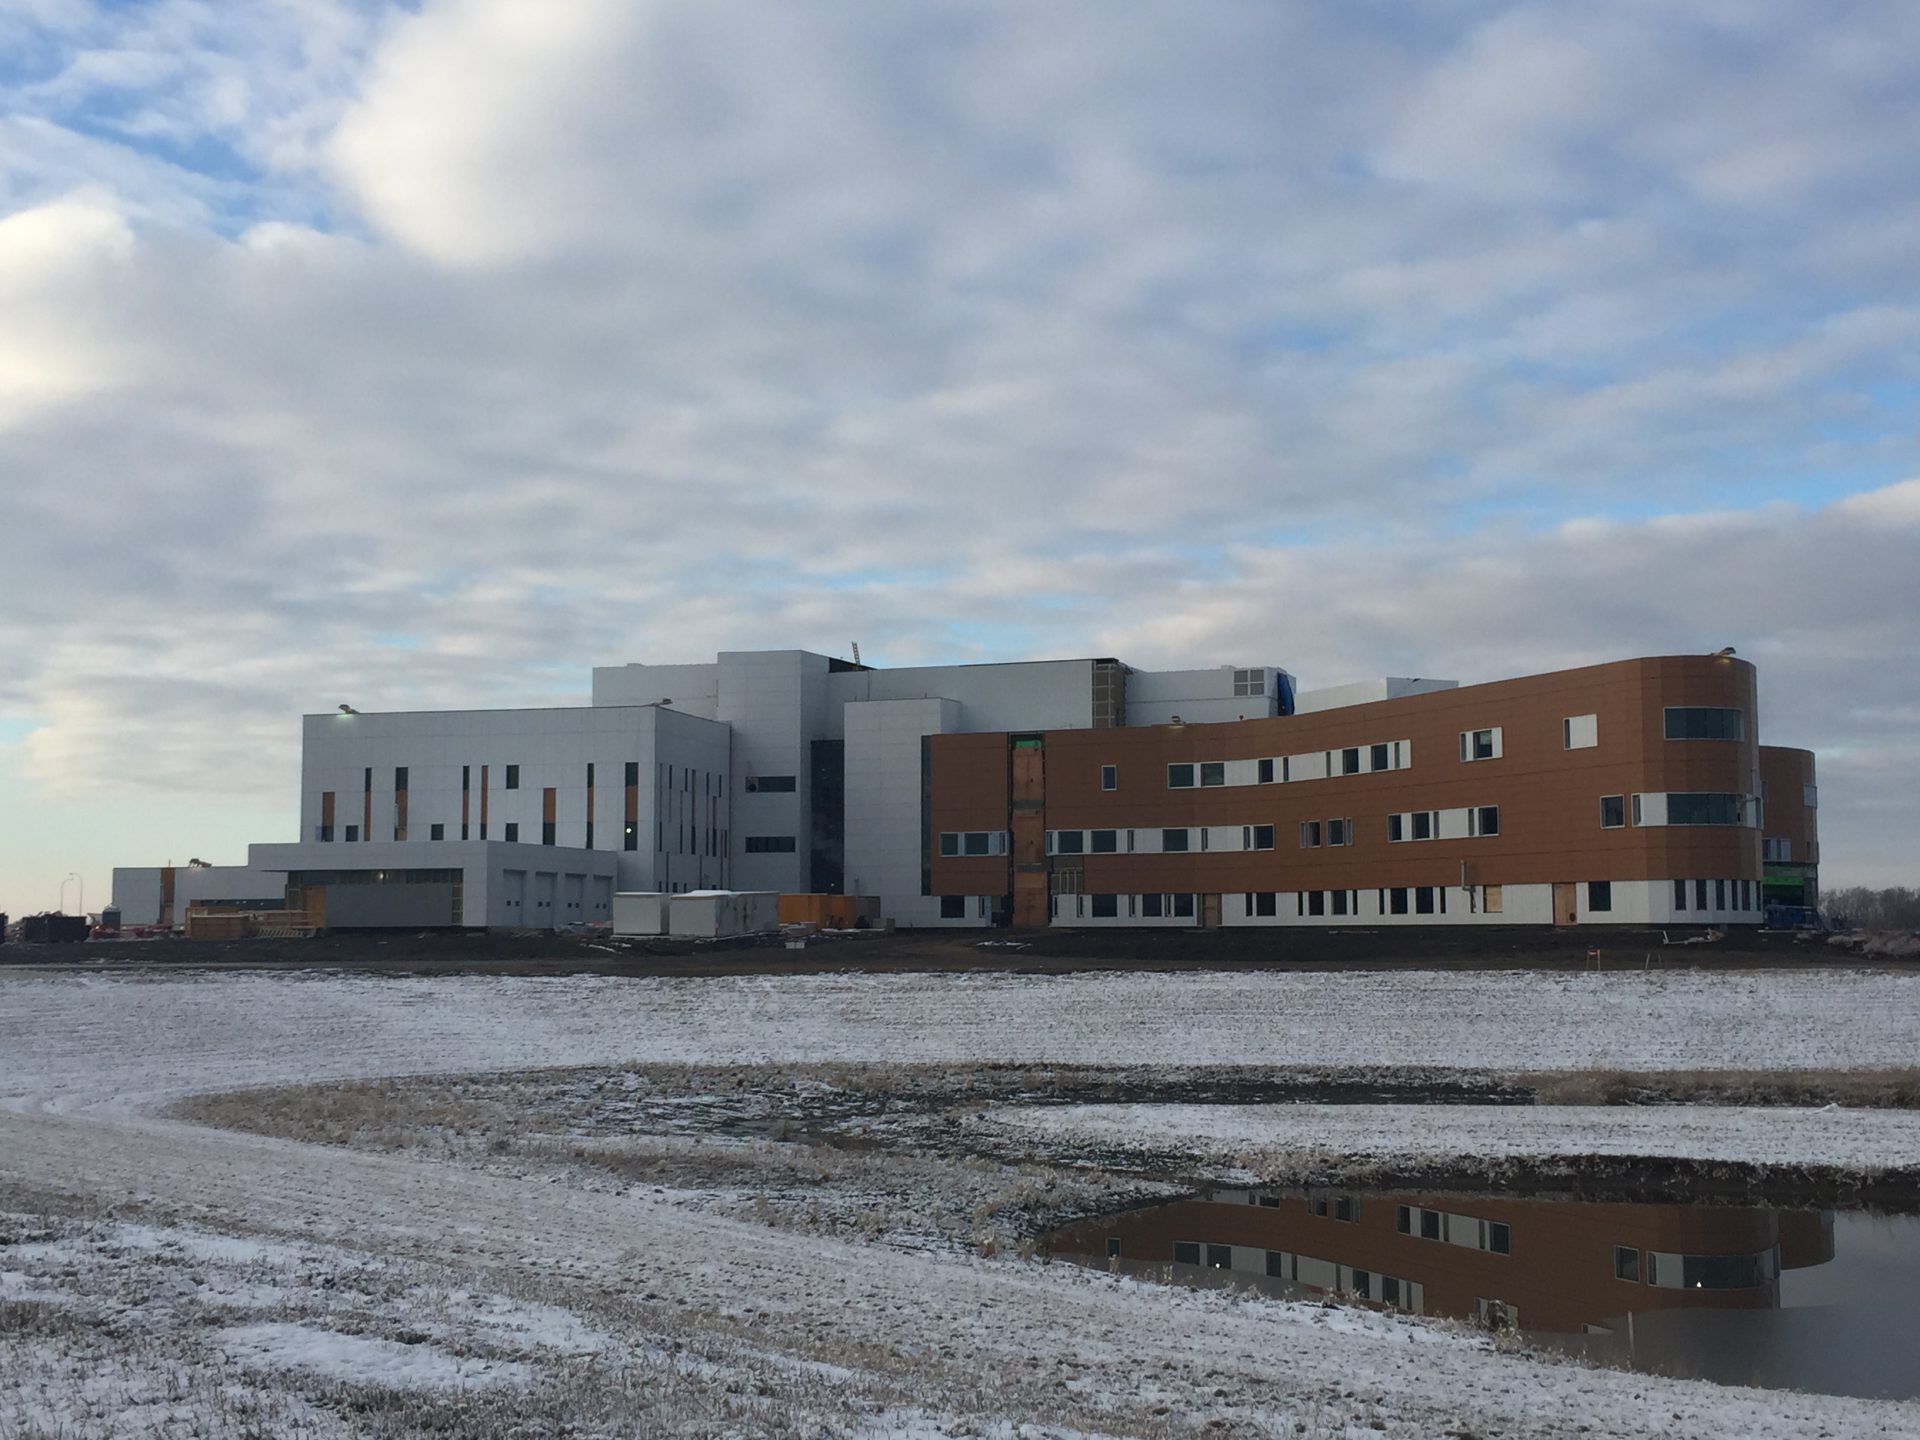 MLA Loewen questions ministers on Grande Prairie Regional Hospital “fiasco”